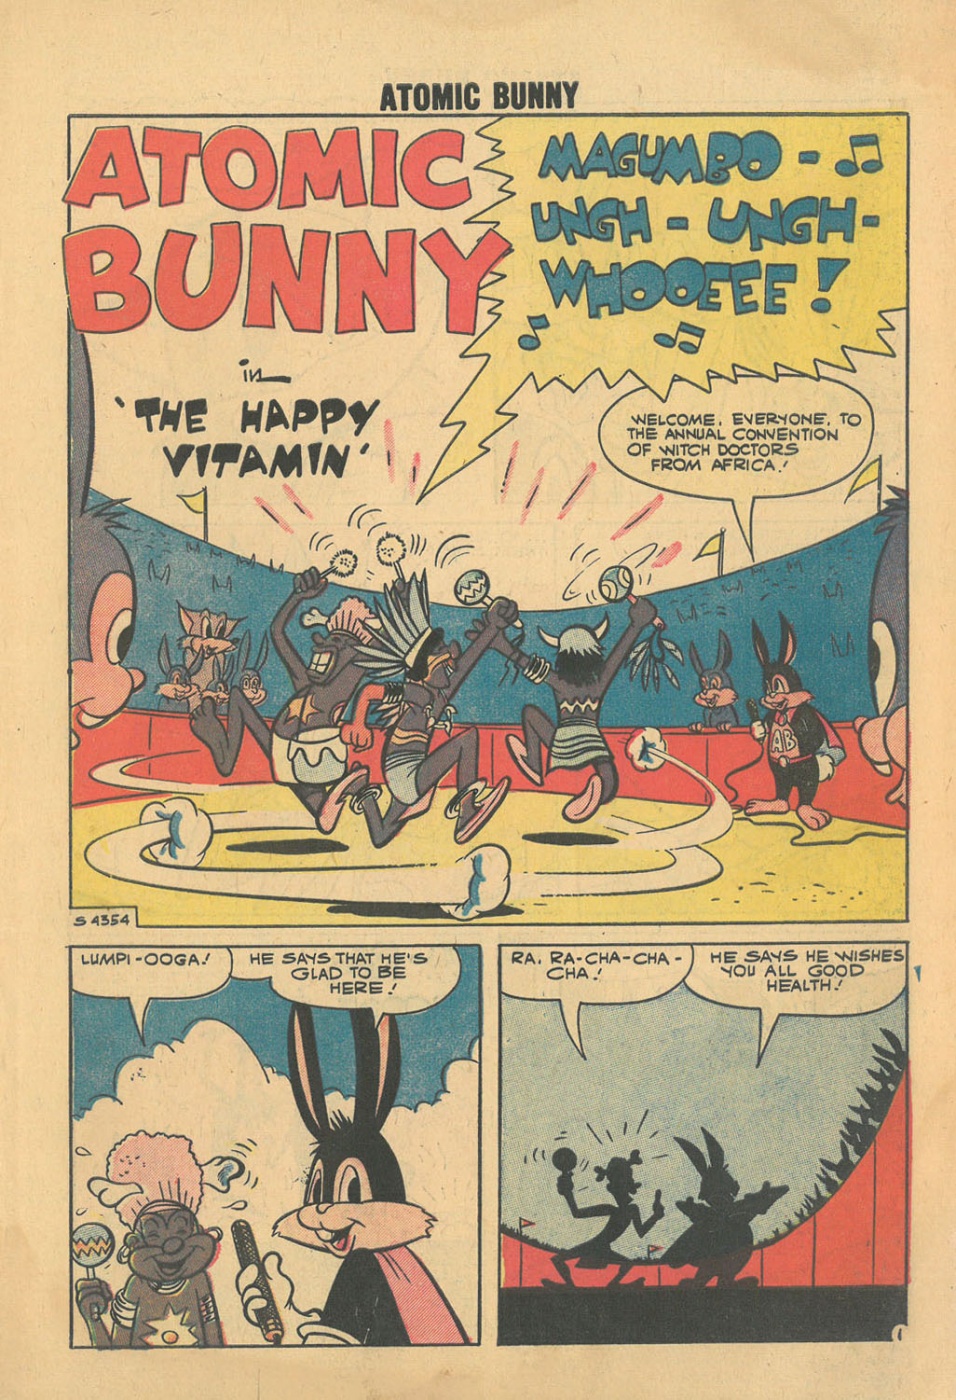 Atomic-Bunny-Comic-Strips (c) (3)